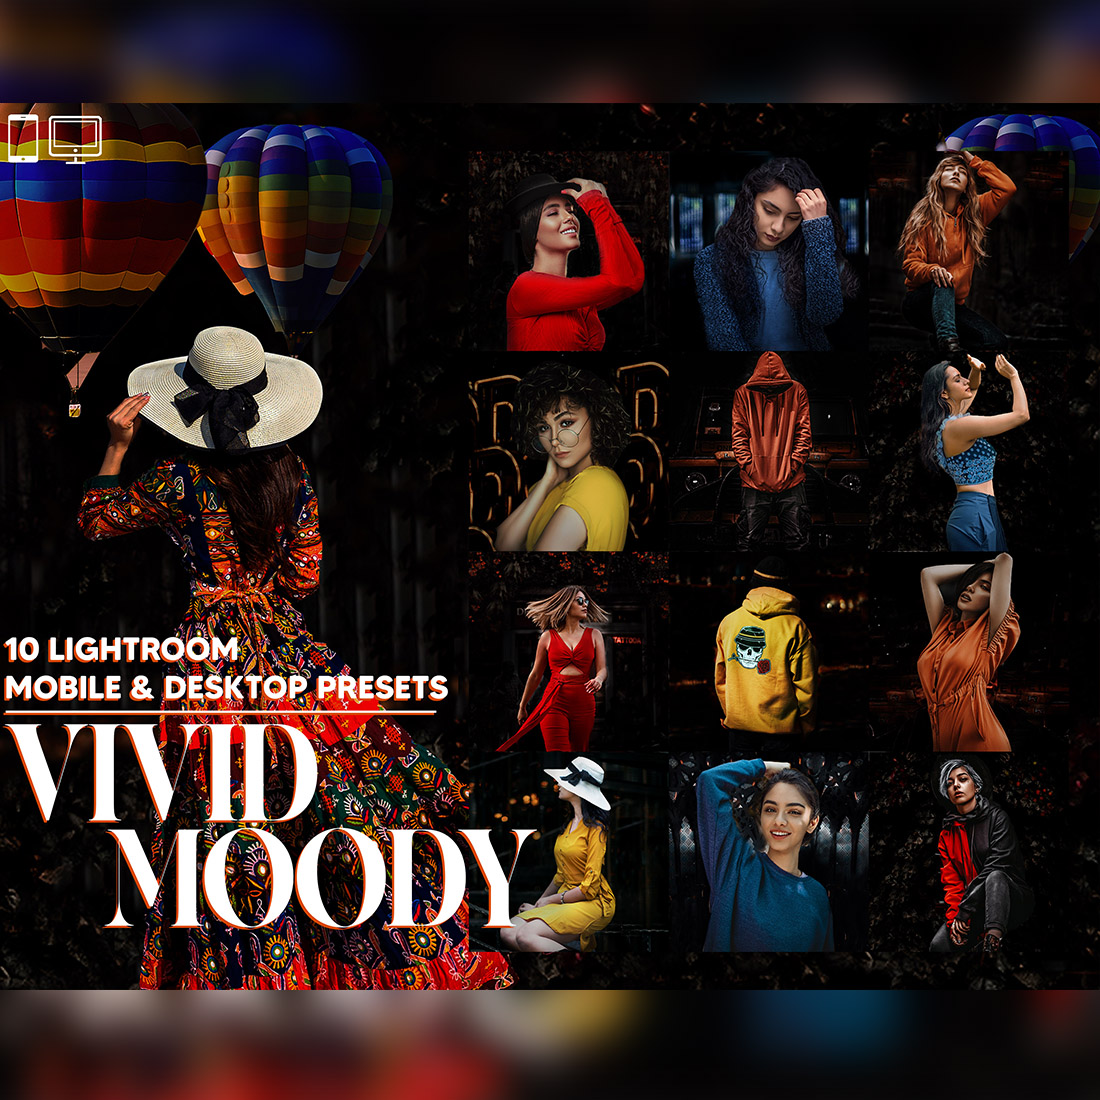 10 Vivid Moody Lightroom Presets, Dark Colorful Mobile Preset, Rich Deep Vibrant Desktop, Portrait Lifestyle Theme Instagram LR Filter DNG cover image.